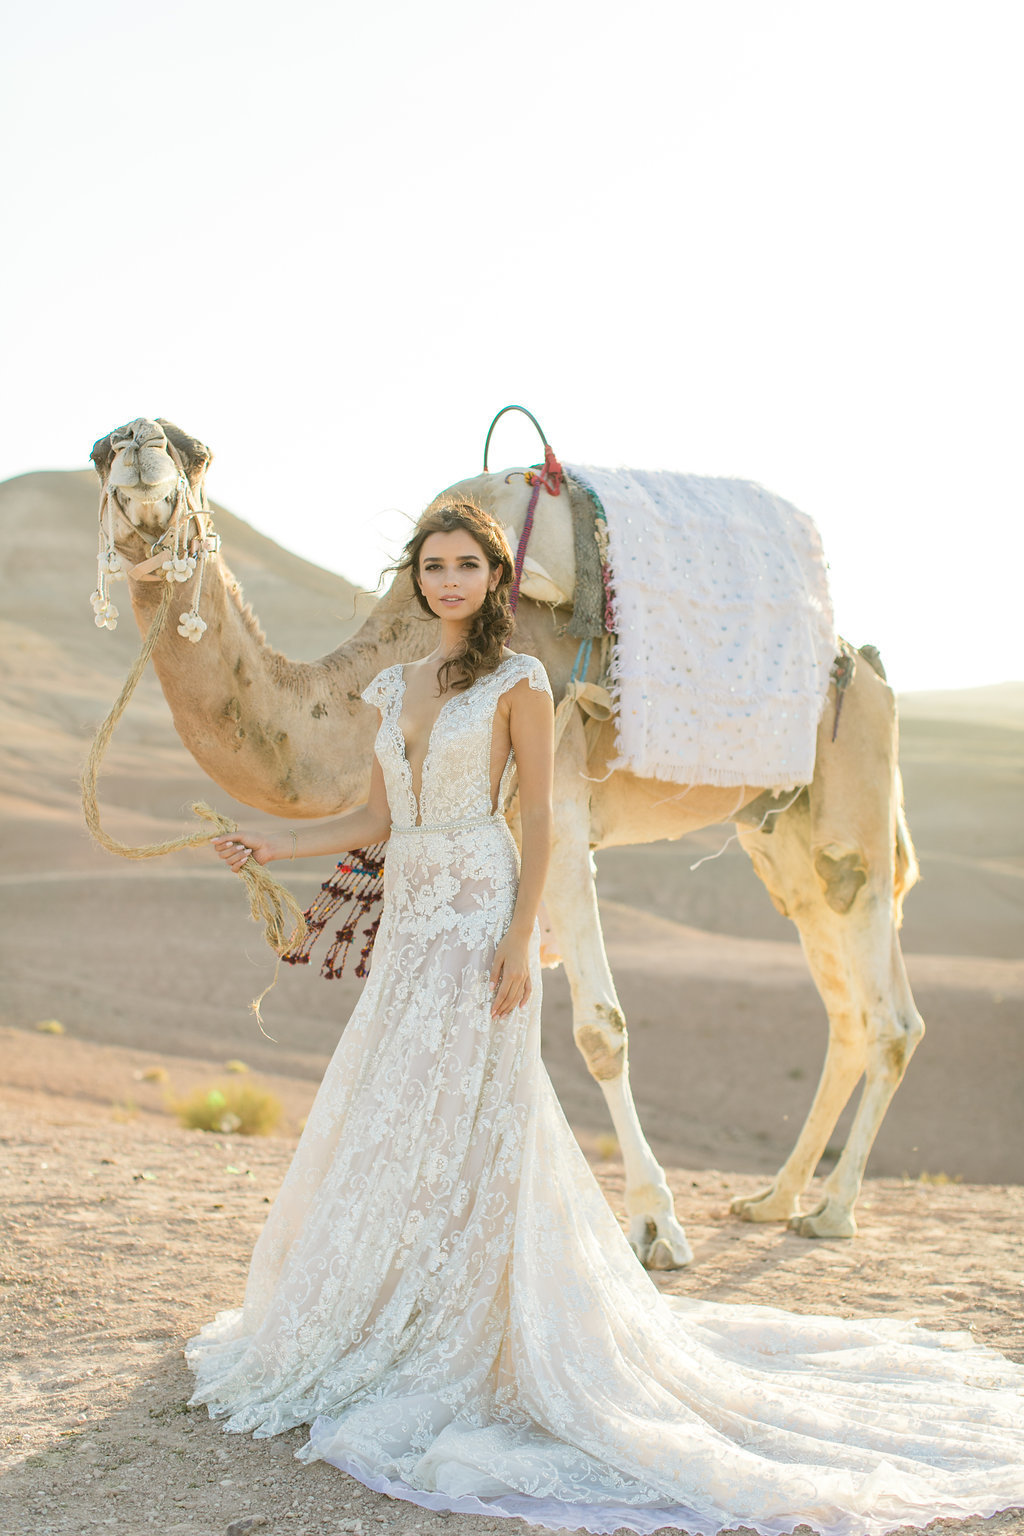 morocco-wedding-desert-roberta-facchini-photography-124